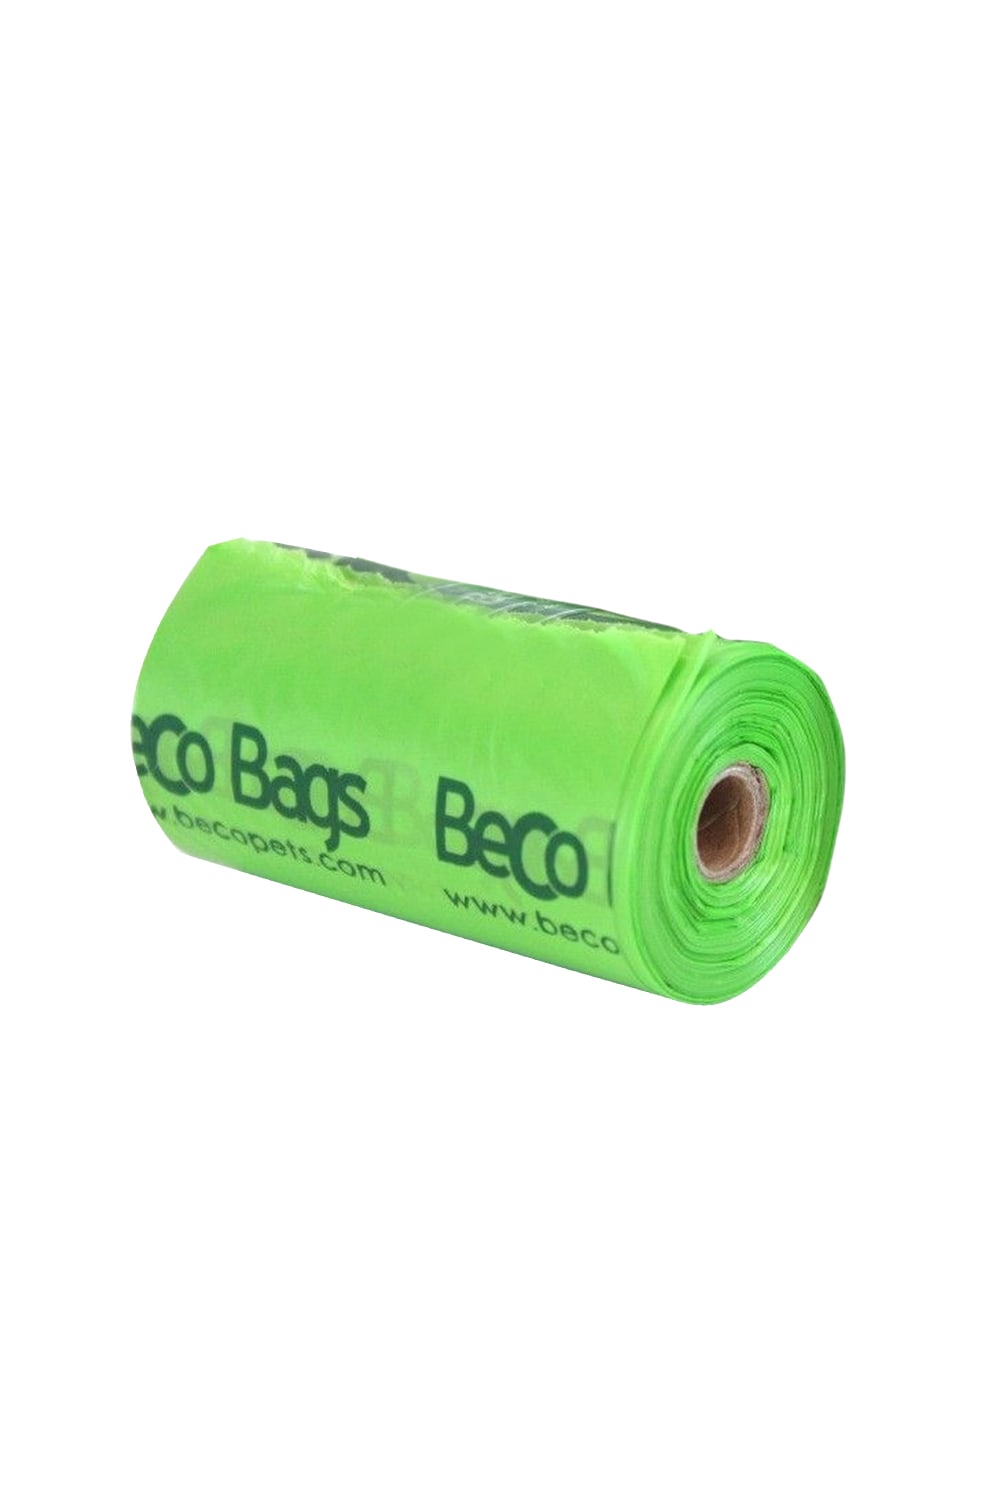 Beco Bags Eco Friendly Dog Poop Bags (Green) (60 bags)